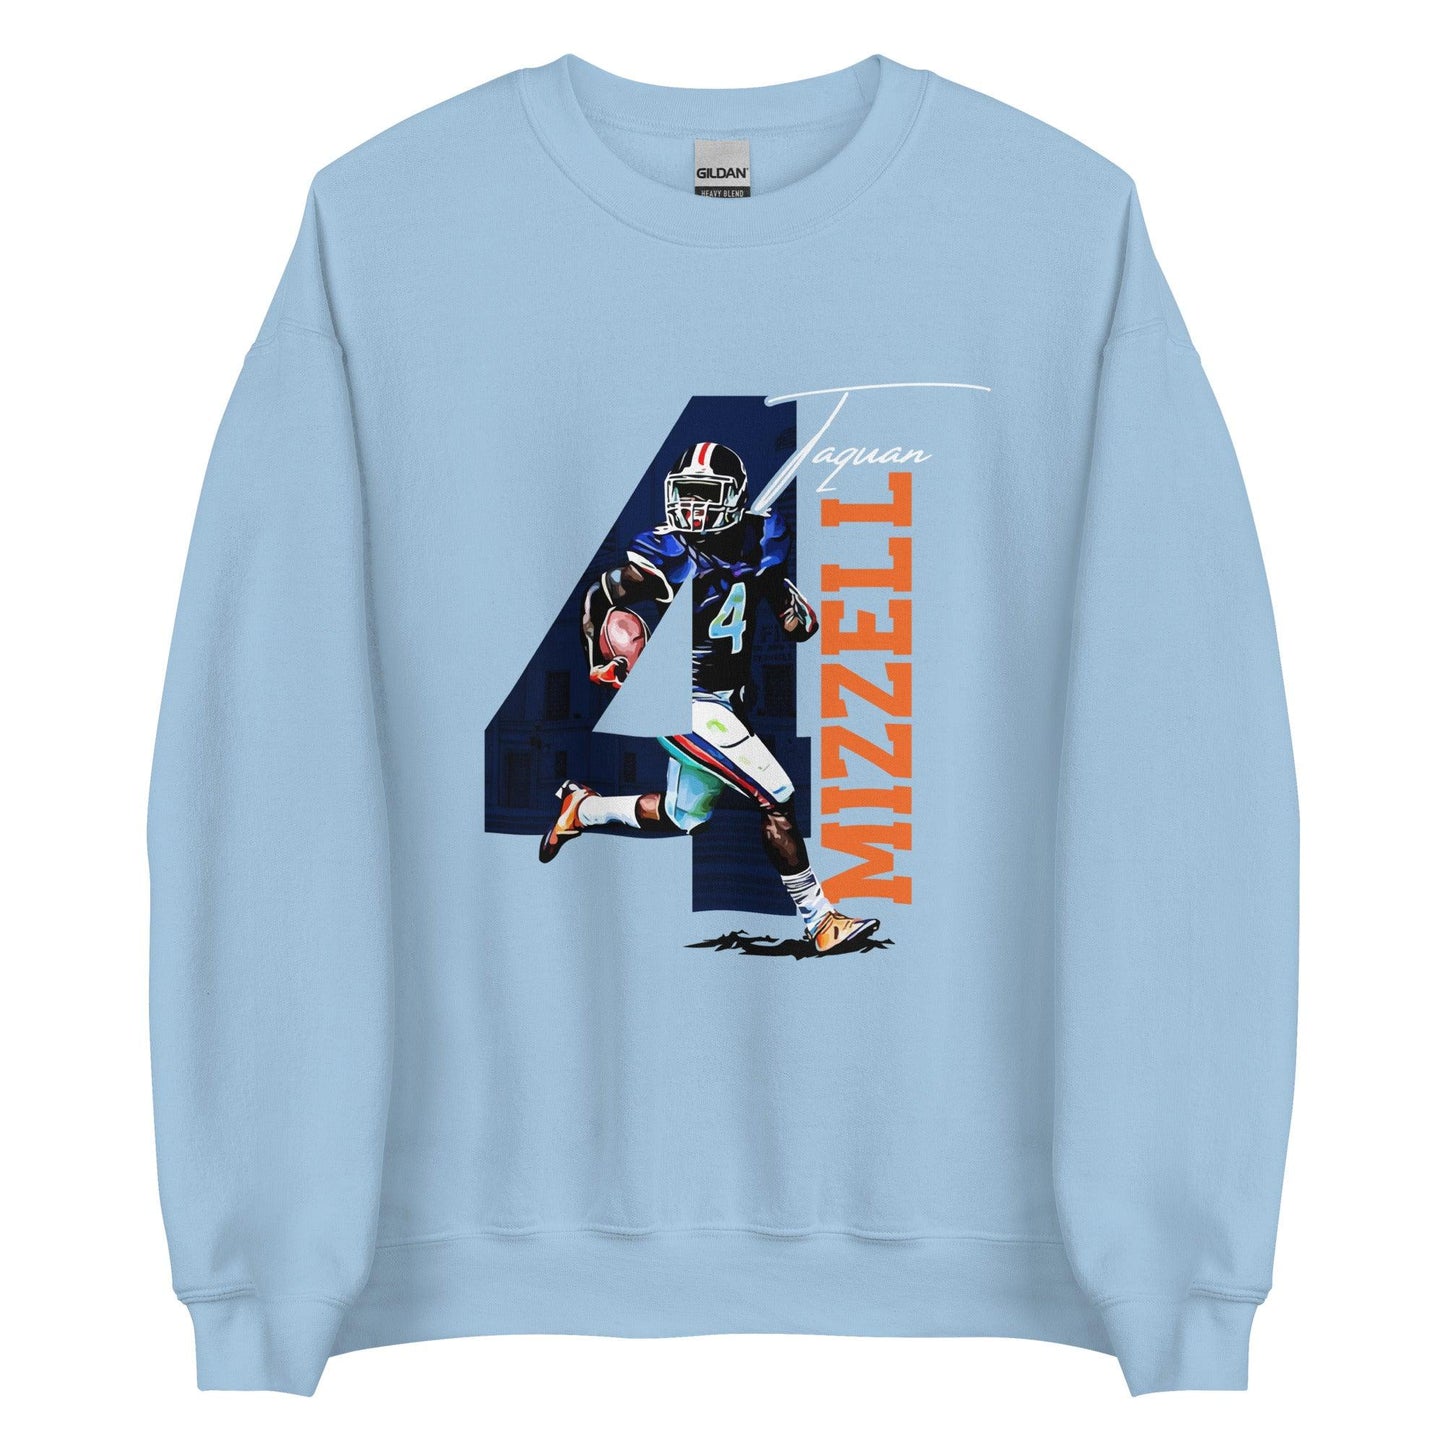 Taquan Mizzell Sr. "4" Sweatshirt - Fan Arch